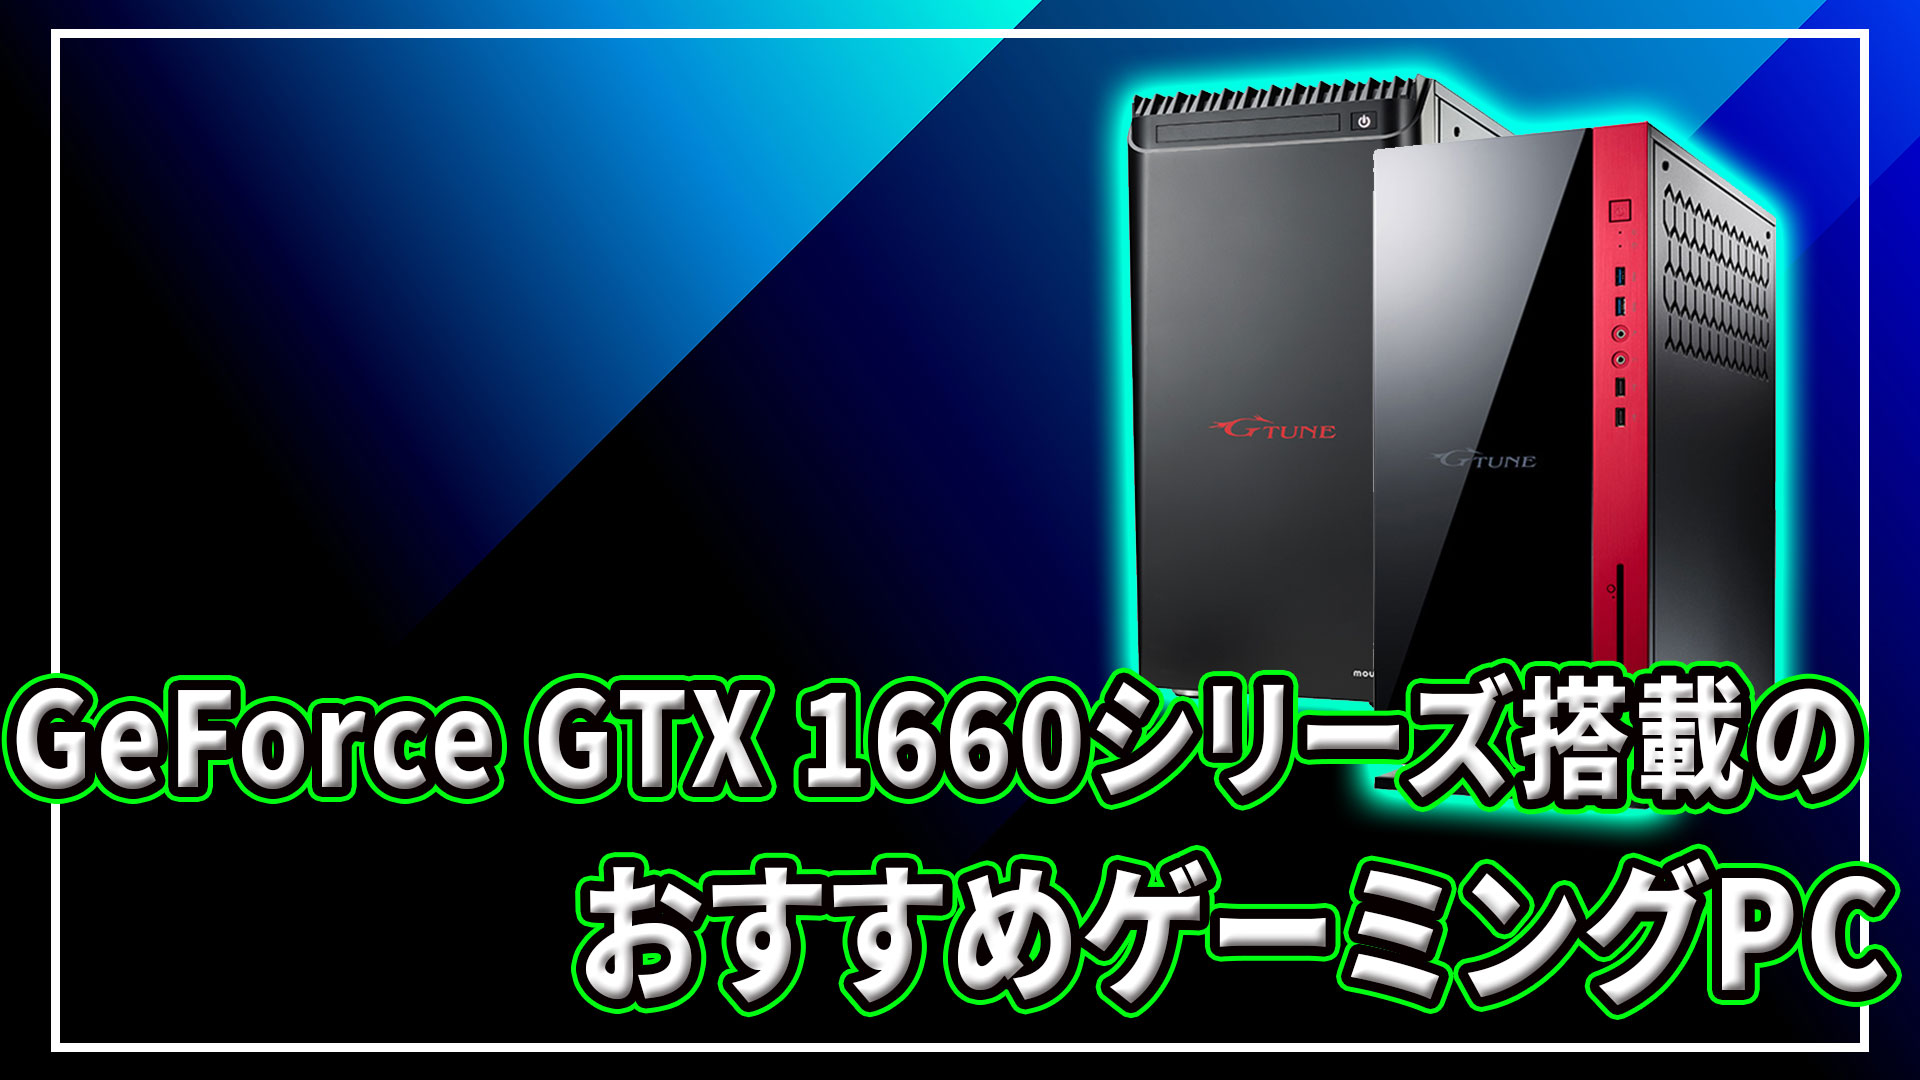 NVIDIA GeForce GTX 1660｣シリーズ搭載のおすすめゲーミングPC4選 